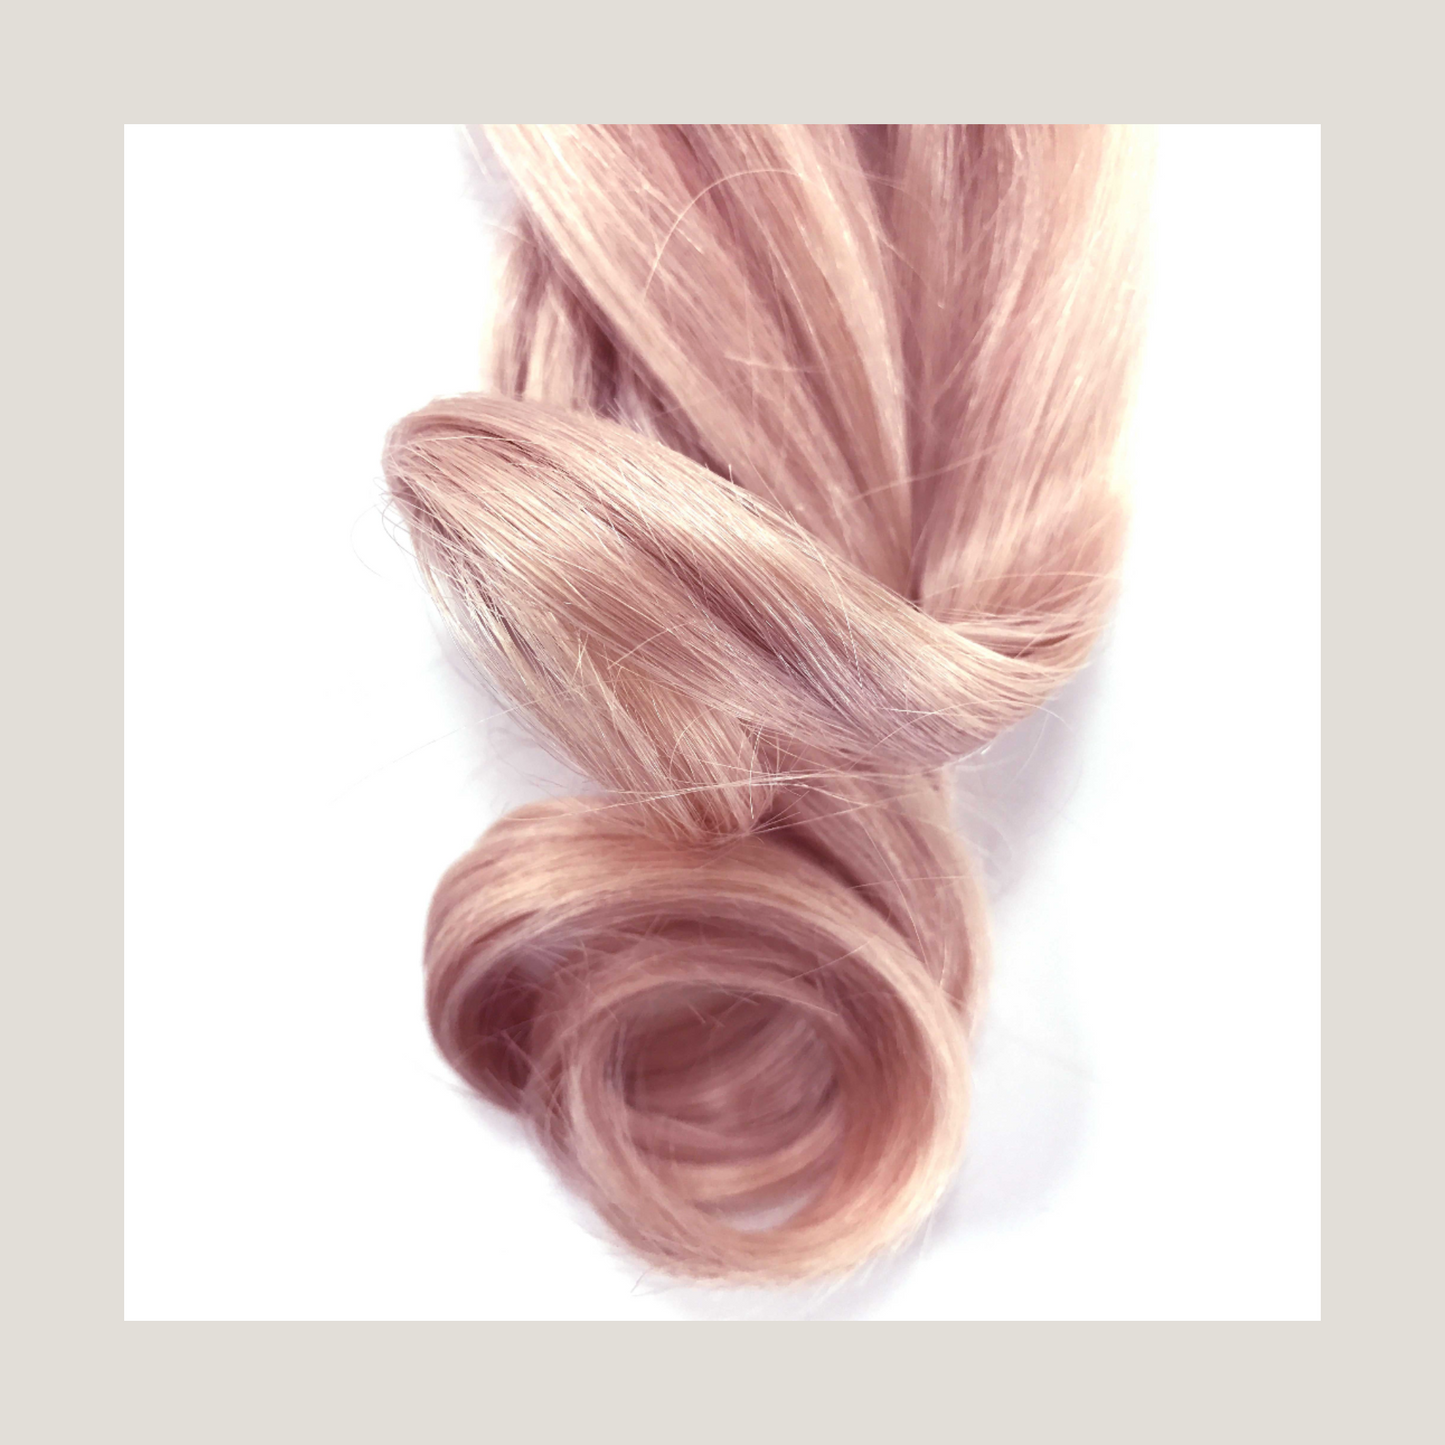 Rose Gold Hair Colour Hair Extensions, Brazilian & European Hair, Balayage